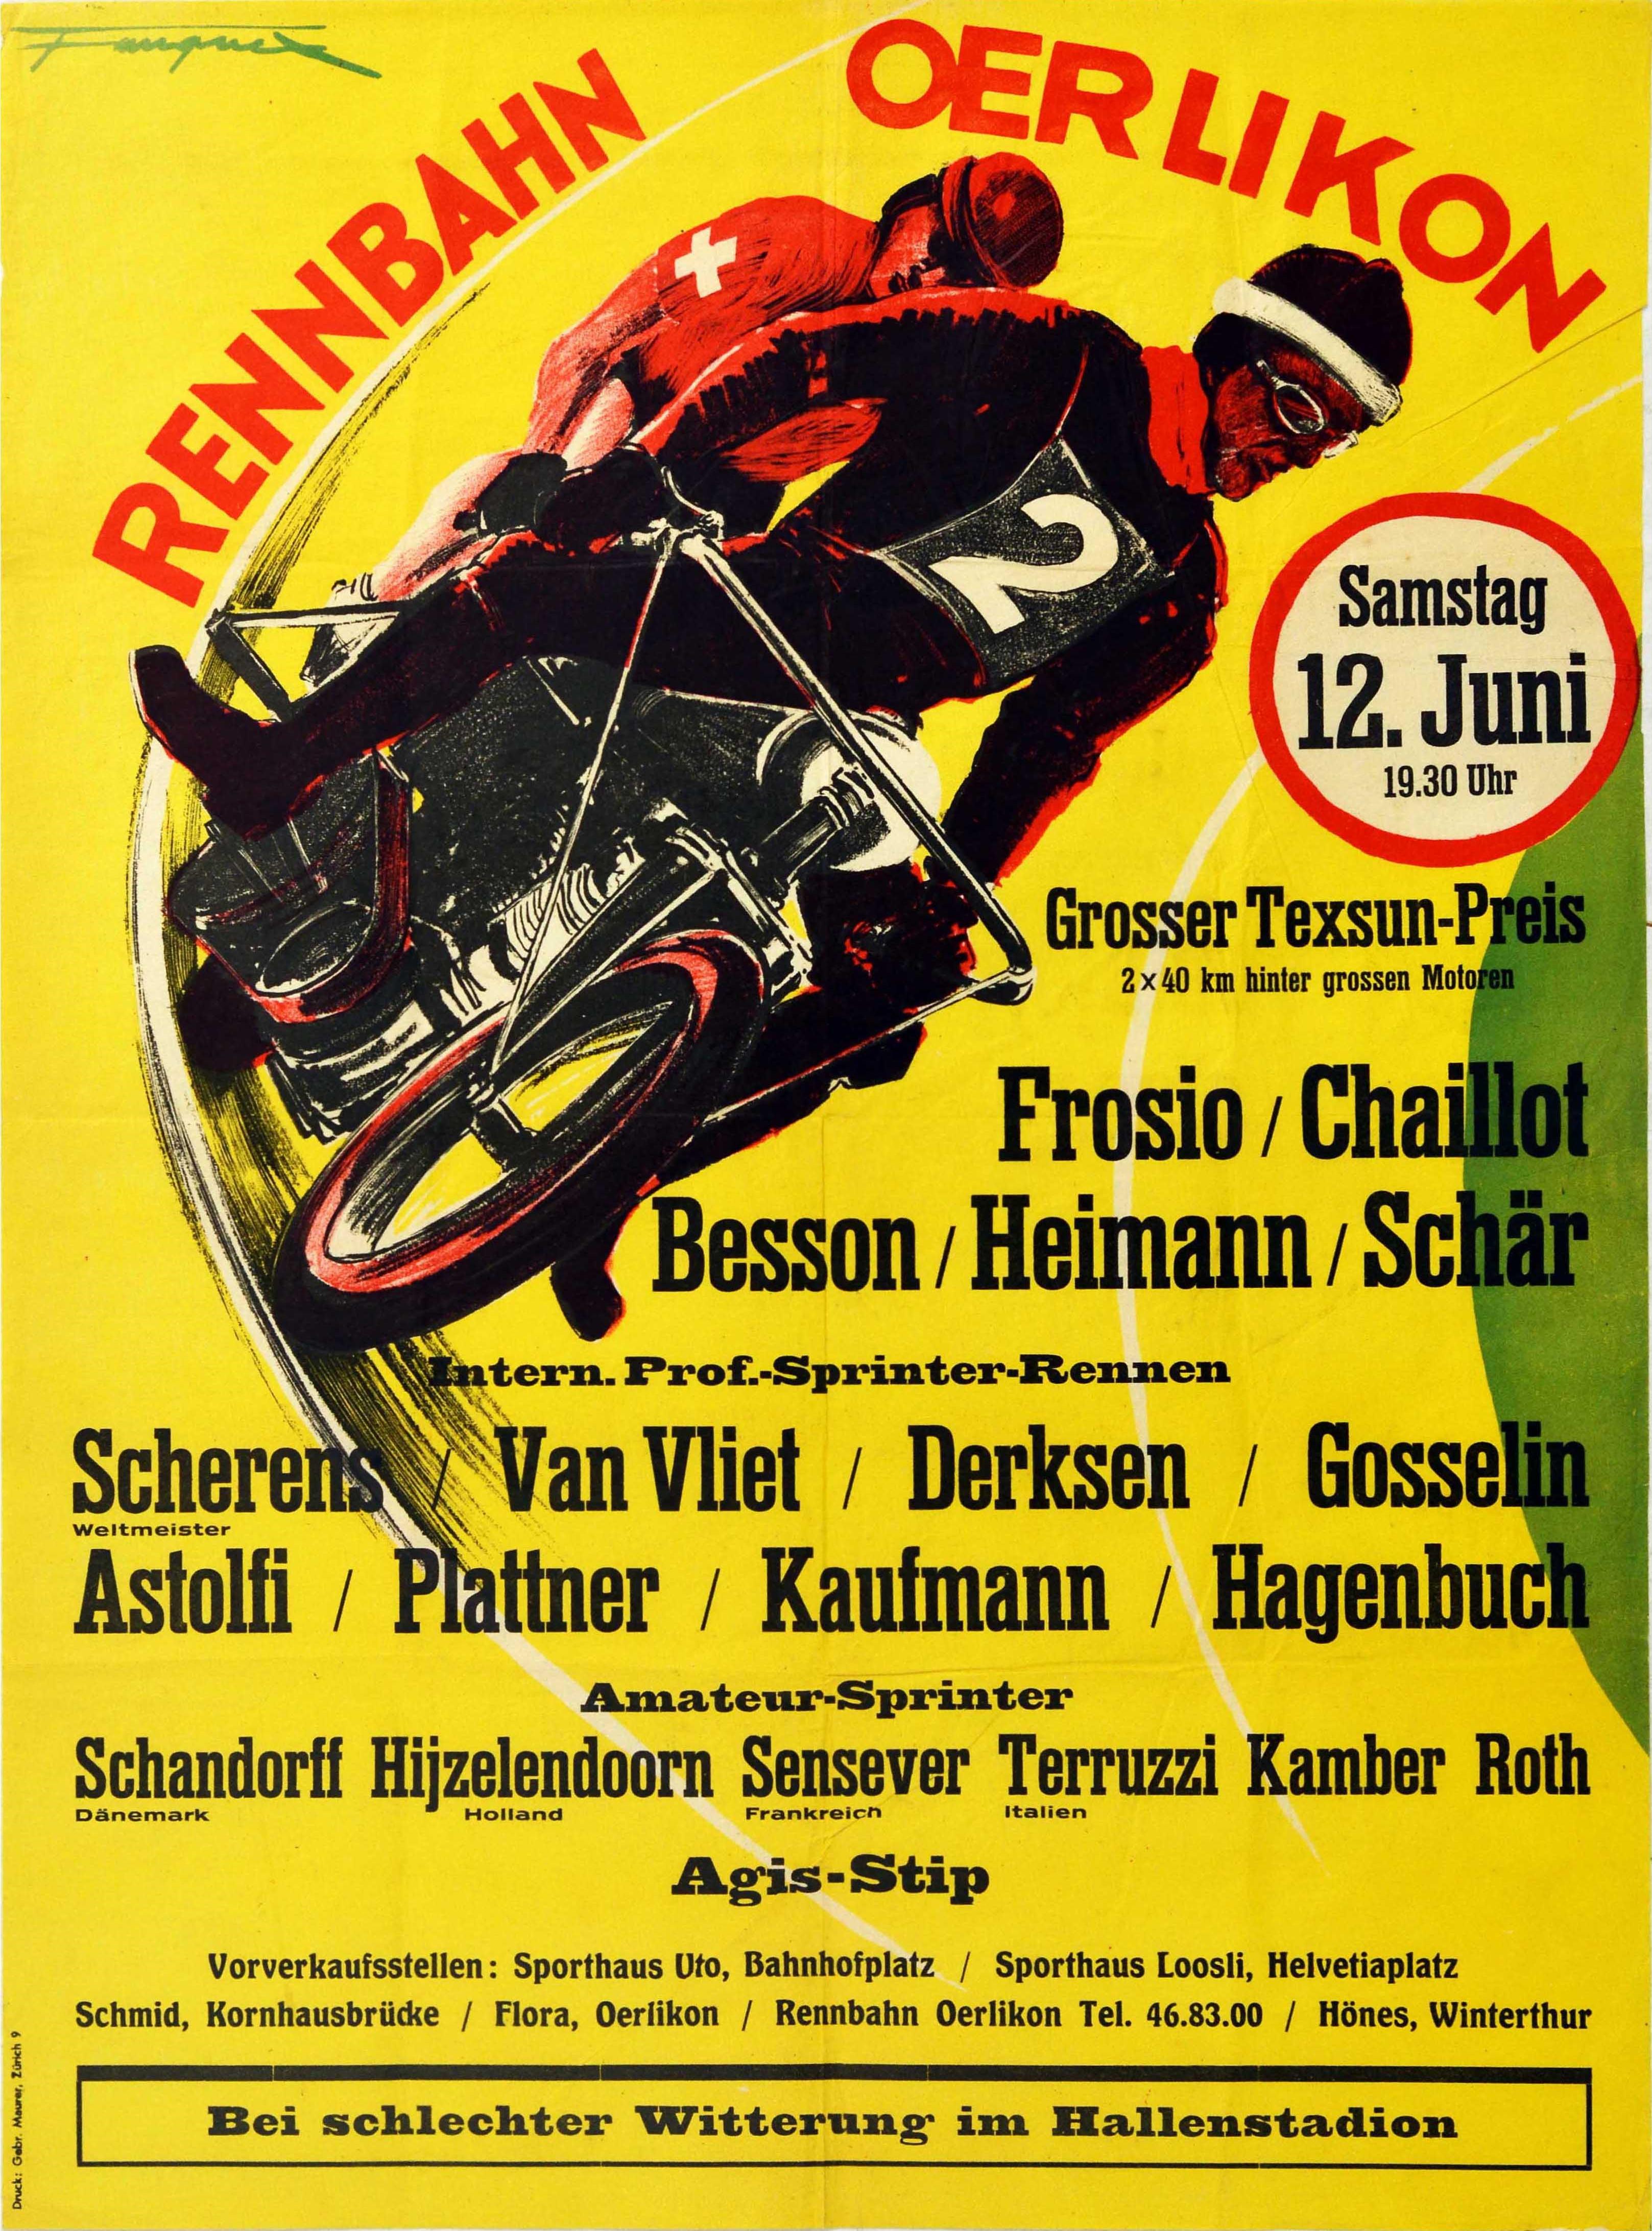 Eugene Fauquex Print - Original Vintage Auto Racing Poster Oerlikon Racecourse Motorcycle Sport Event